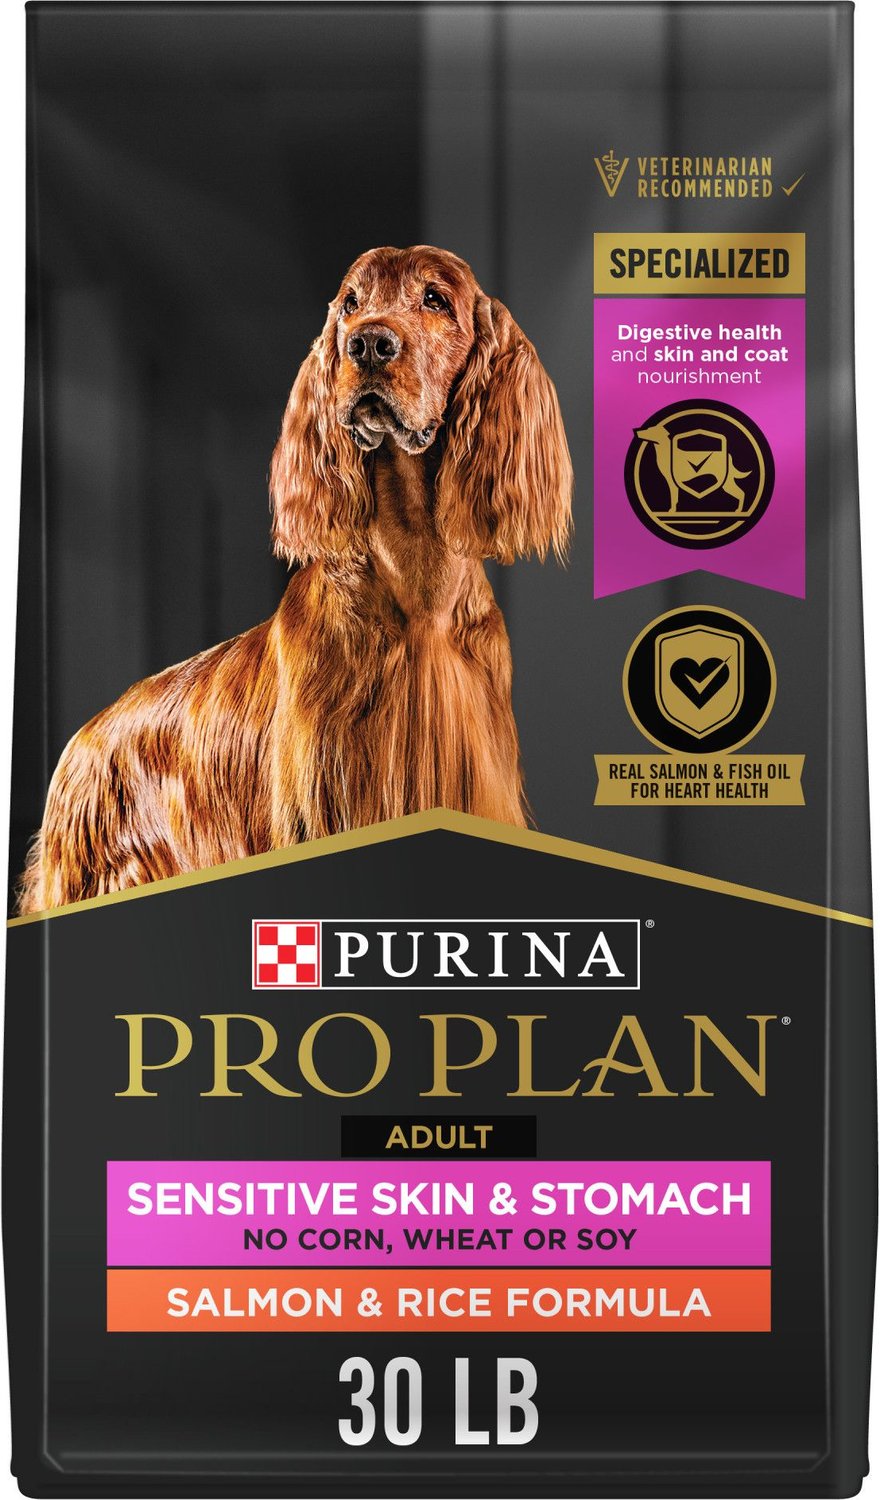 Purina Pro Plan Focus Adult Sensitive Skin & Stomach Salmon & Rice